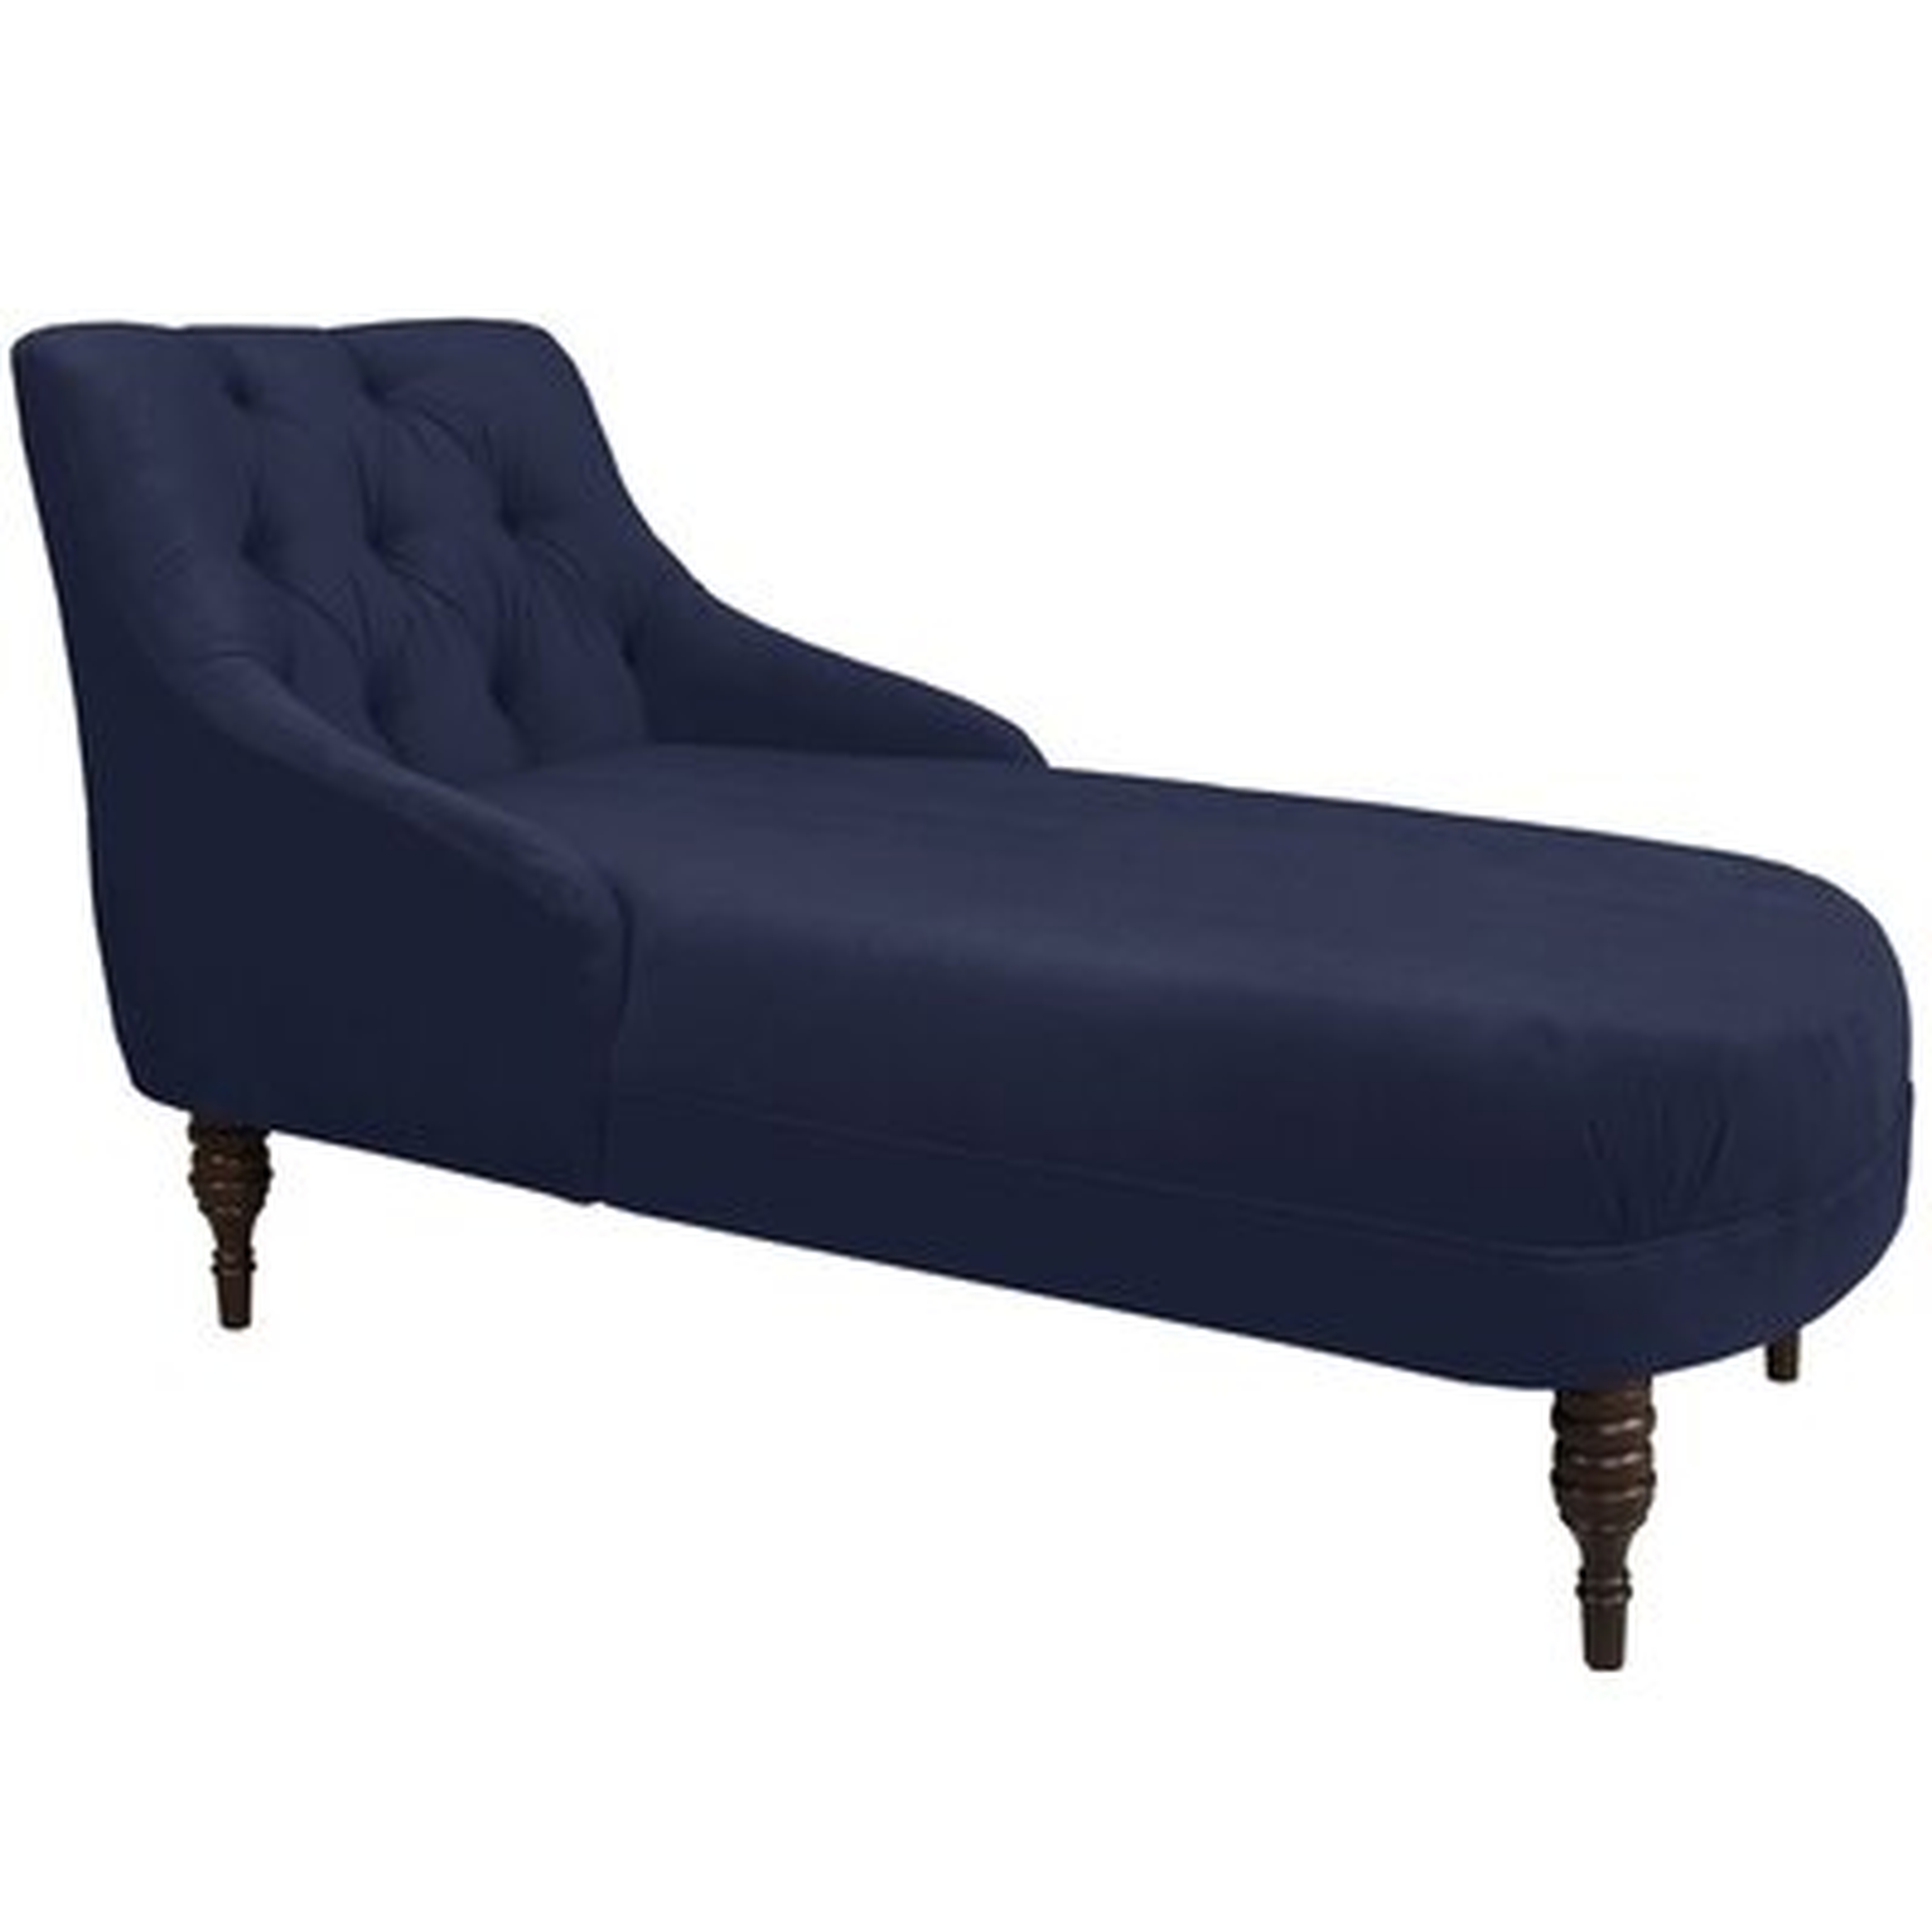 Stonington Tufted Slope Arm Chaise Lounge - Wayfair